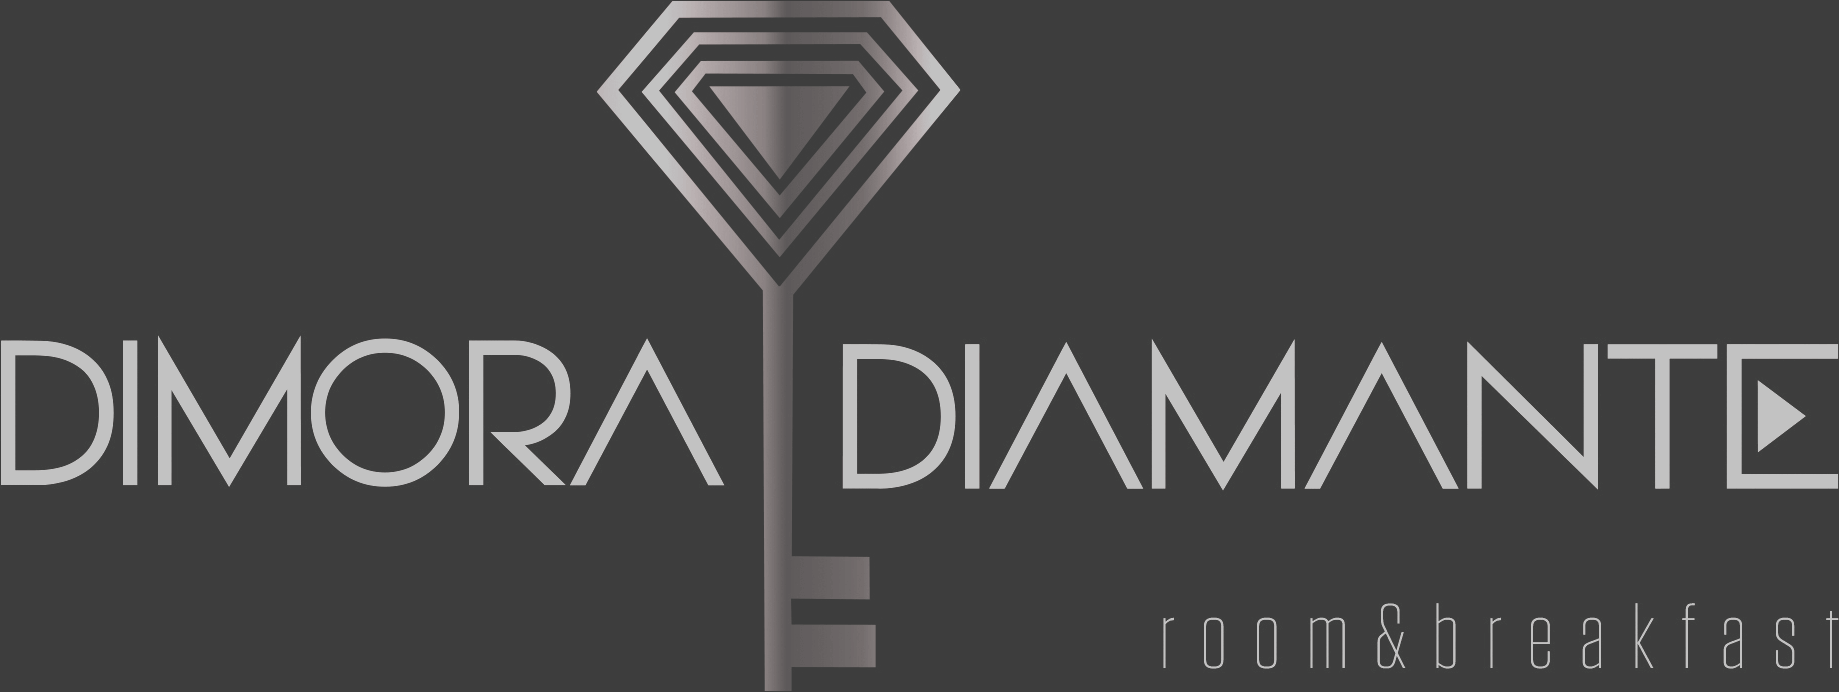 B&B Dimora Diamante